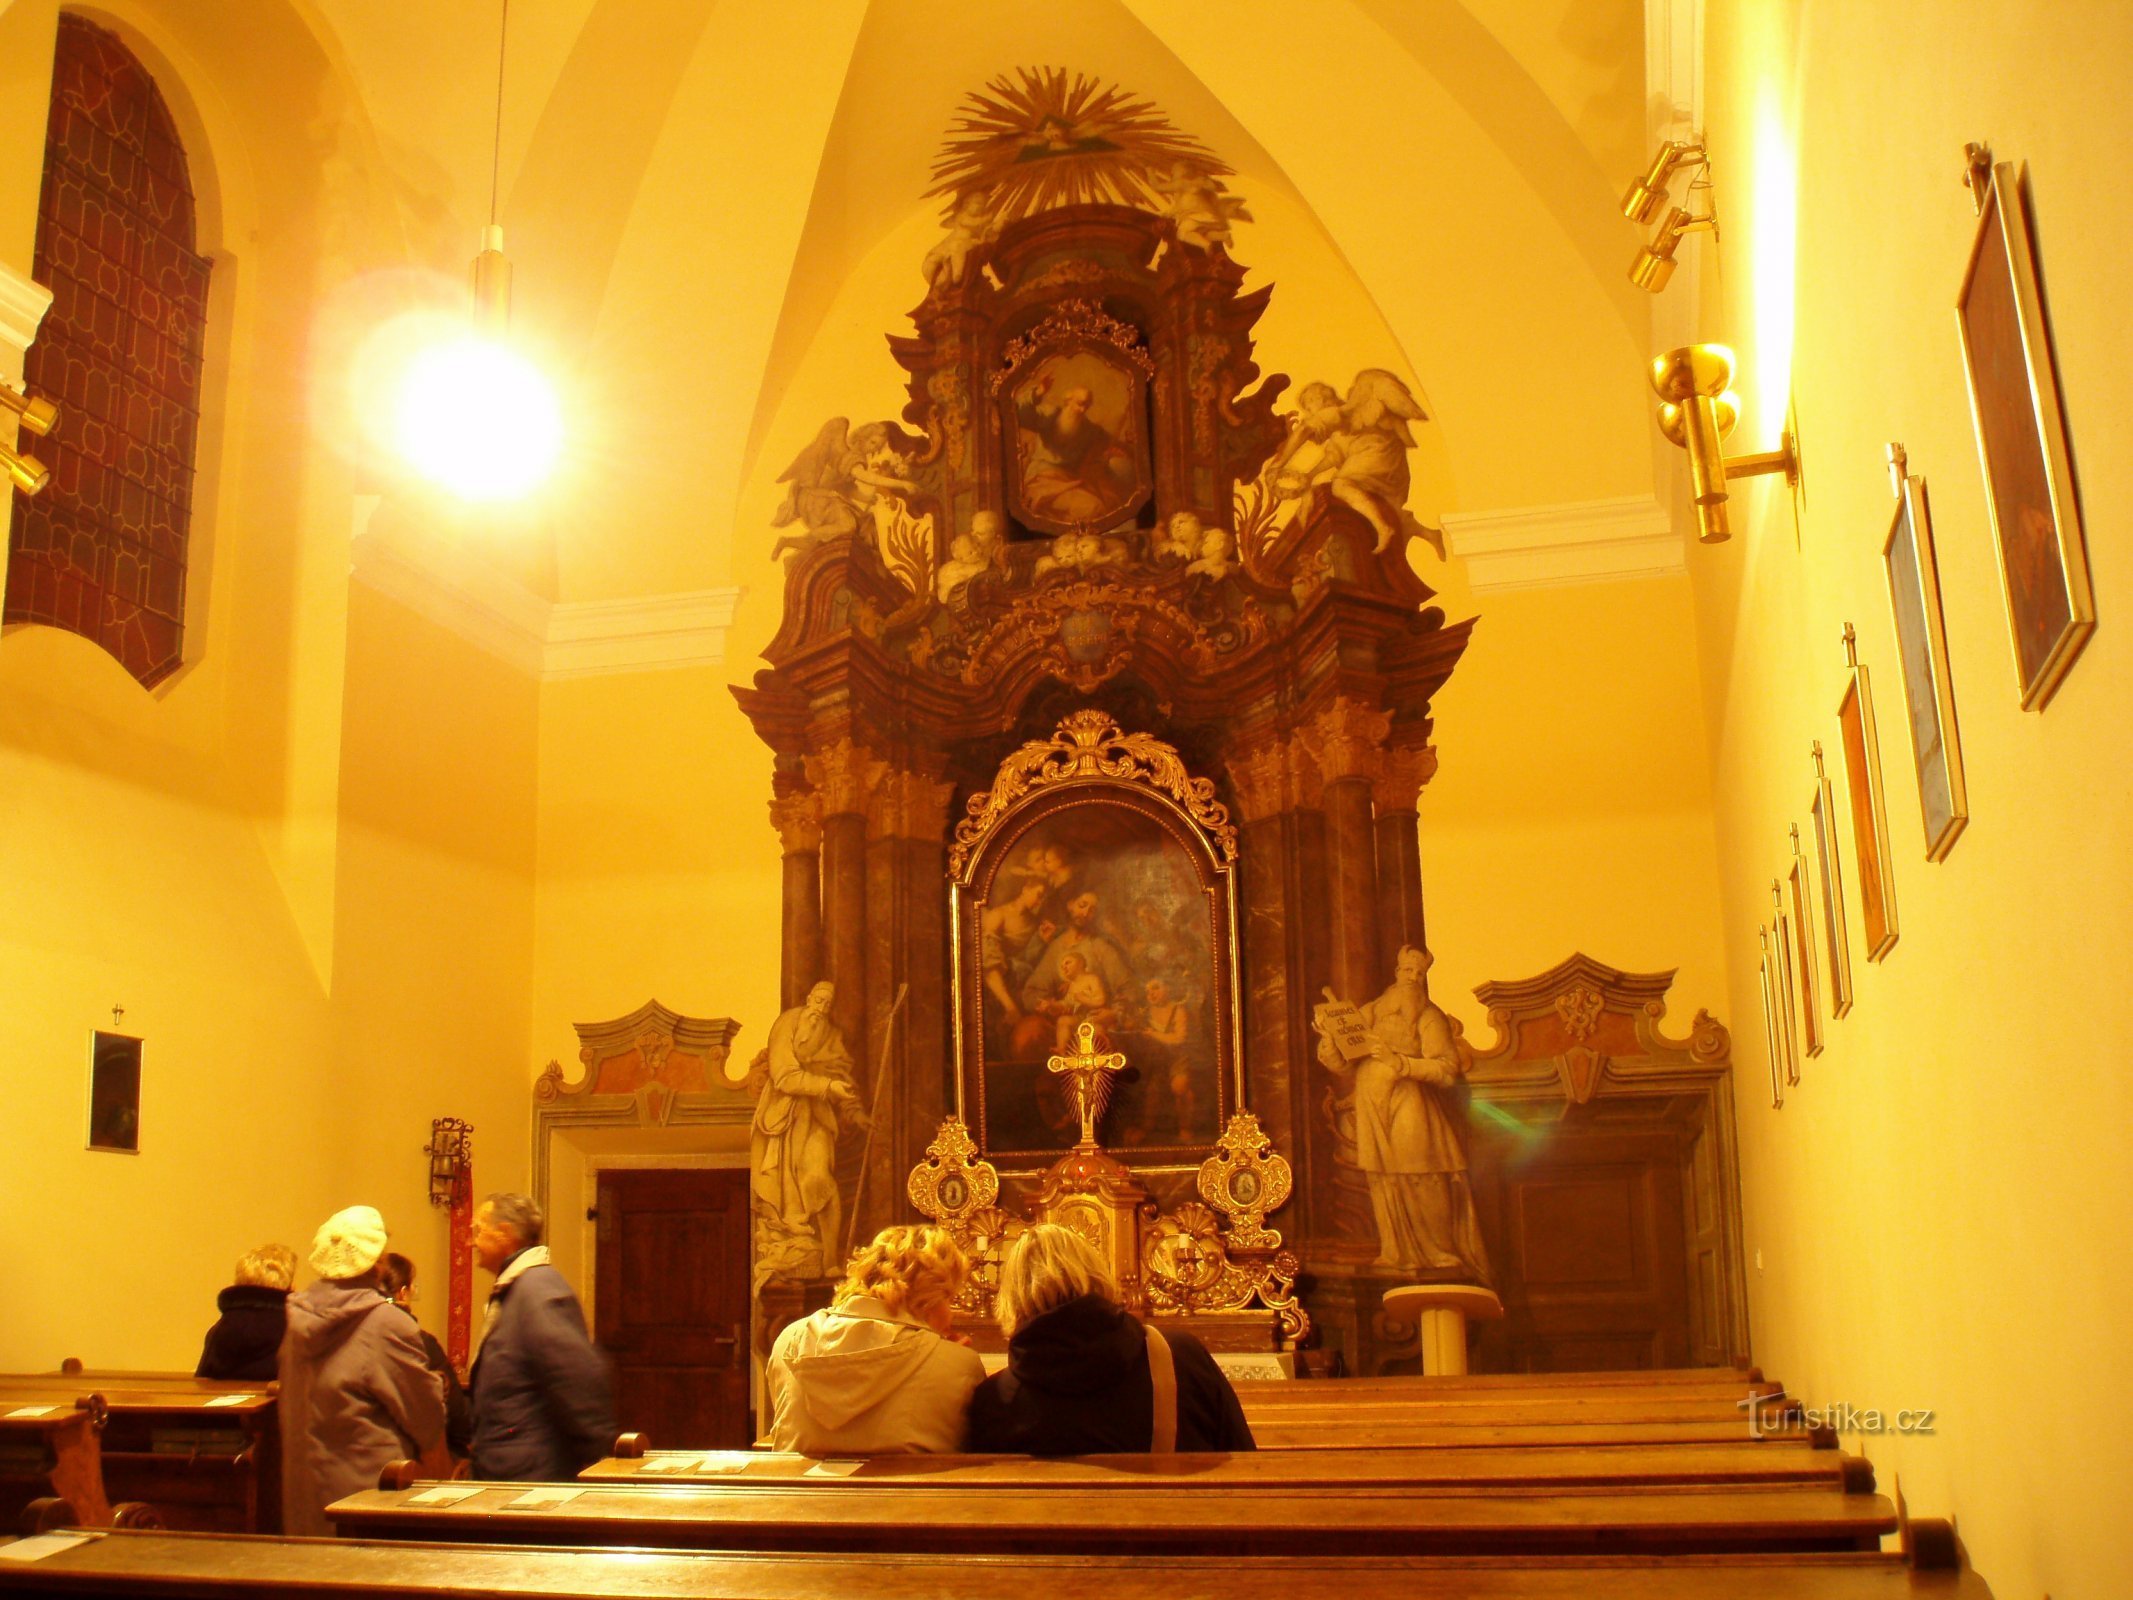 Innenraum der Kapelle St. Josefa (Hradec Králové, 19.3.2010)